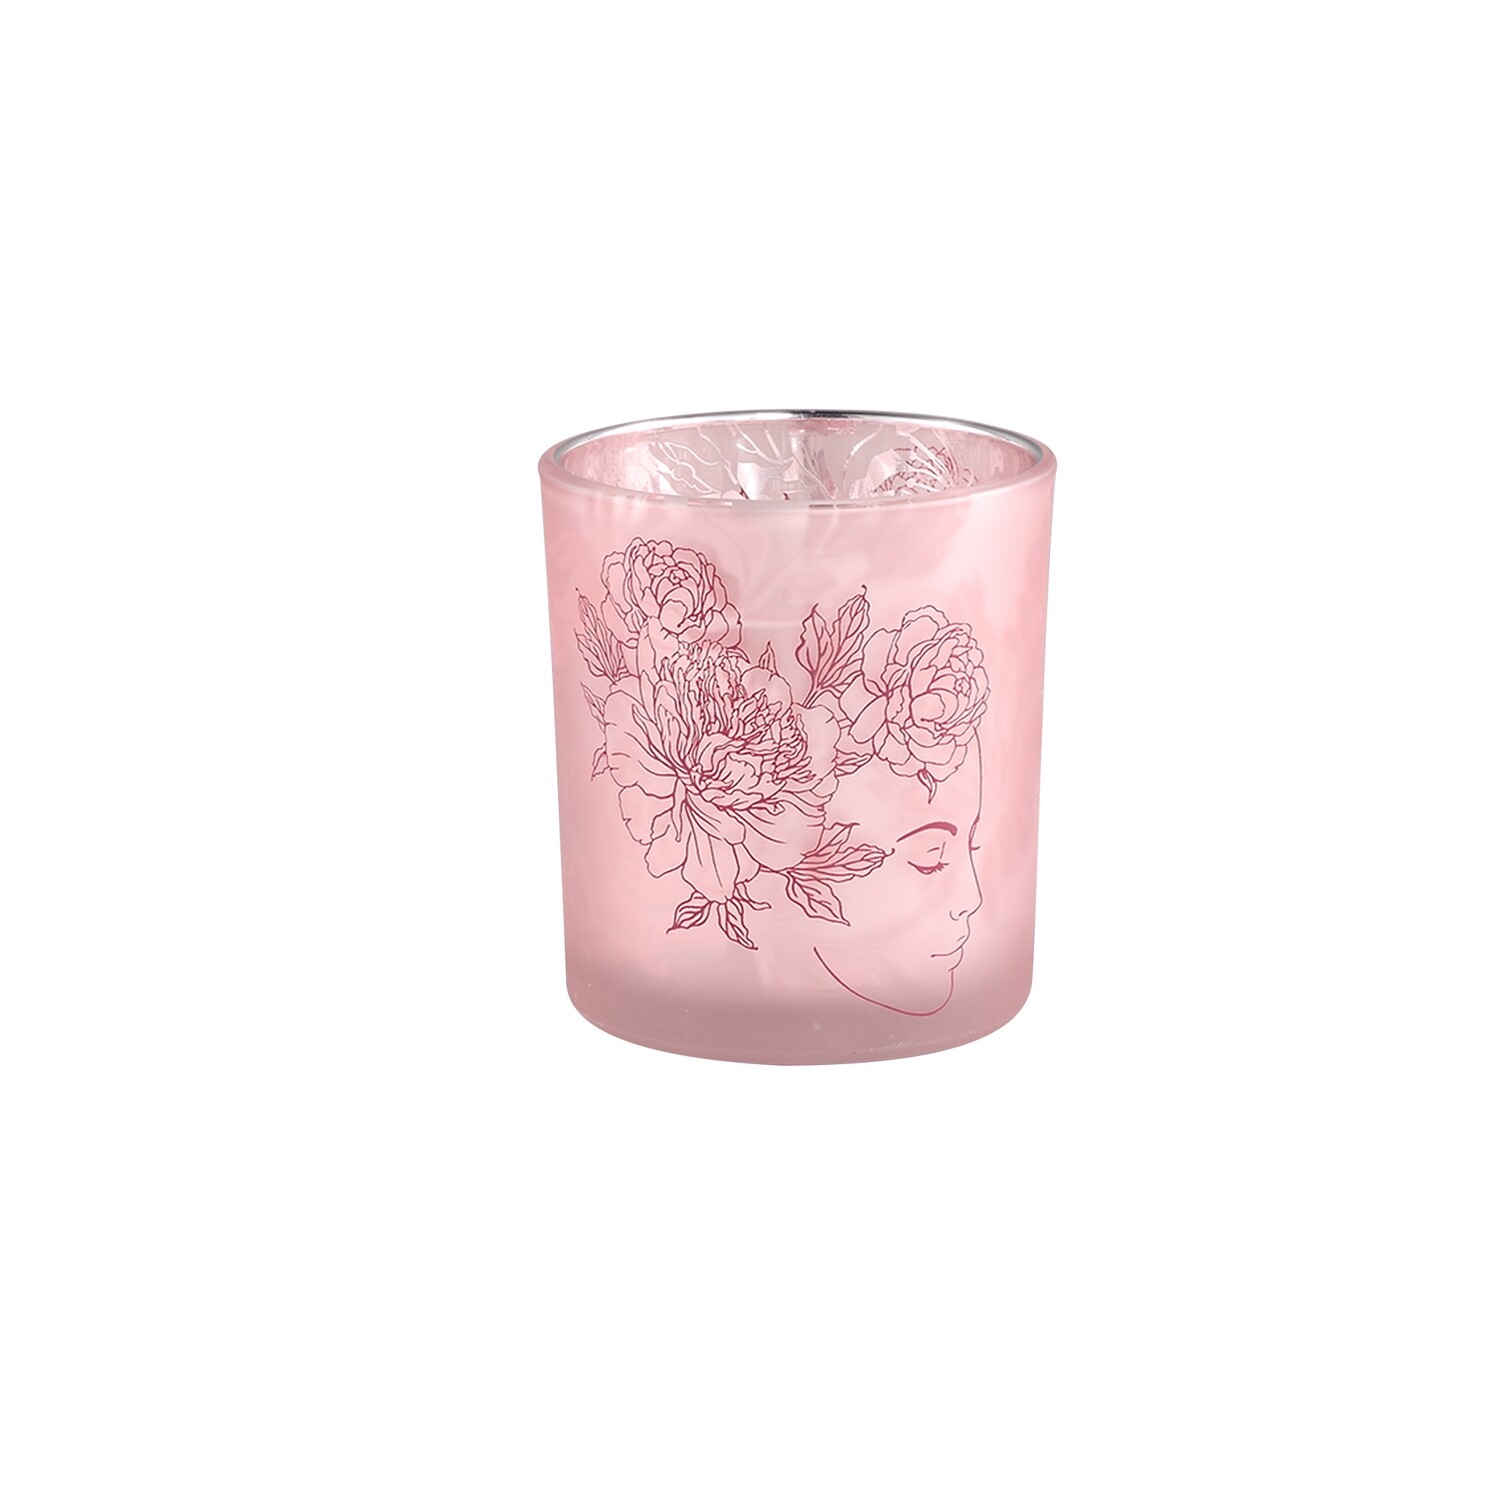 Shana Pink glass tealight flowers round S